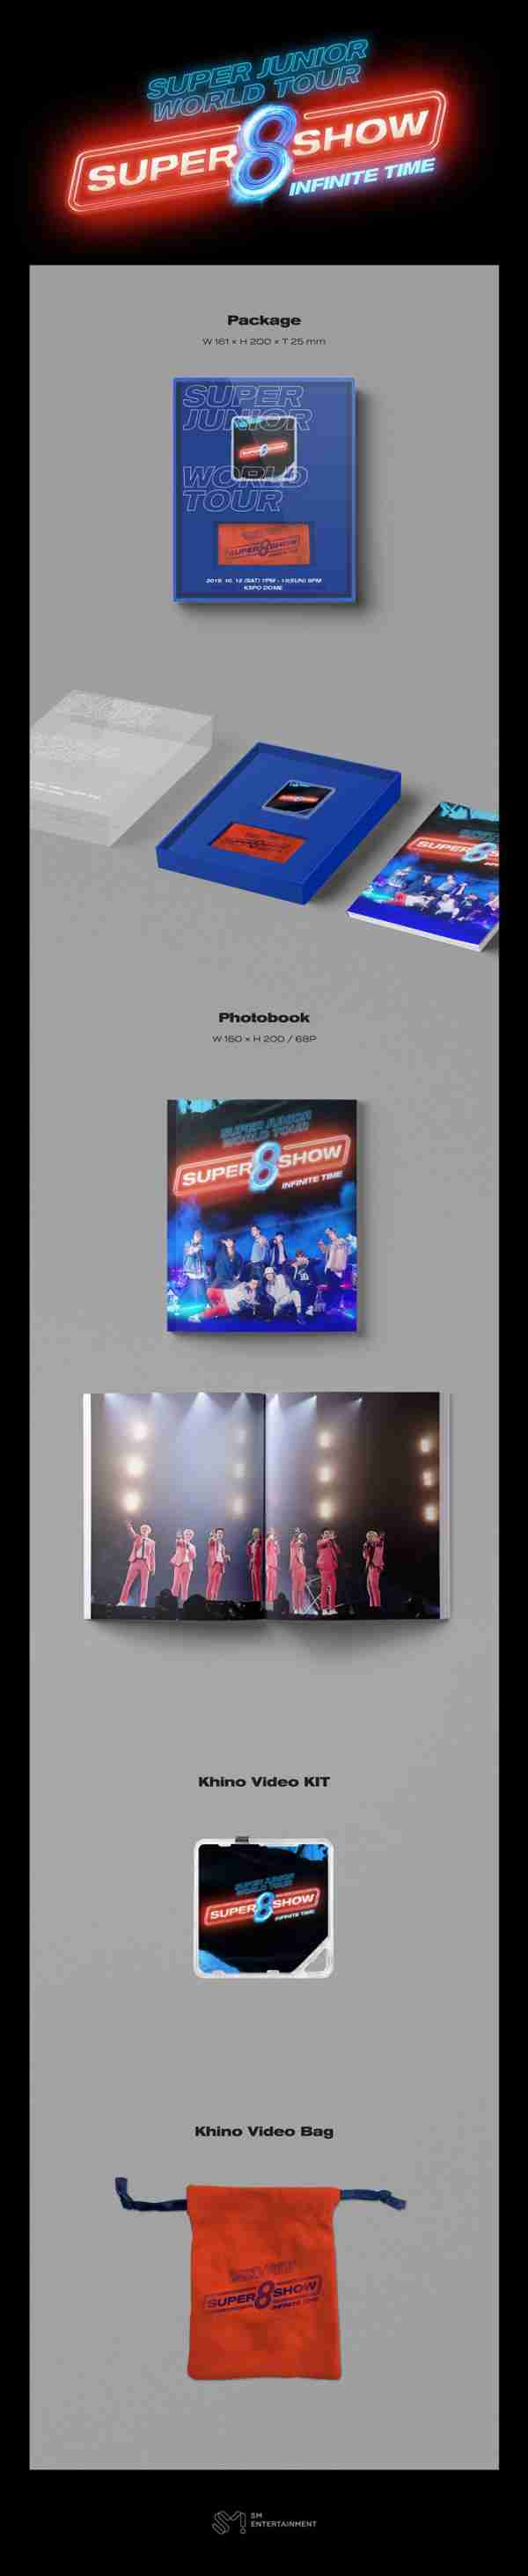 Super Junior World Tour - Super Show 8 Infinite Time 